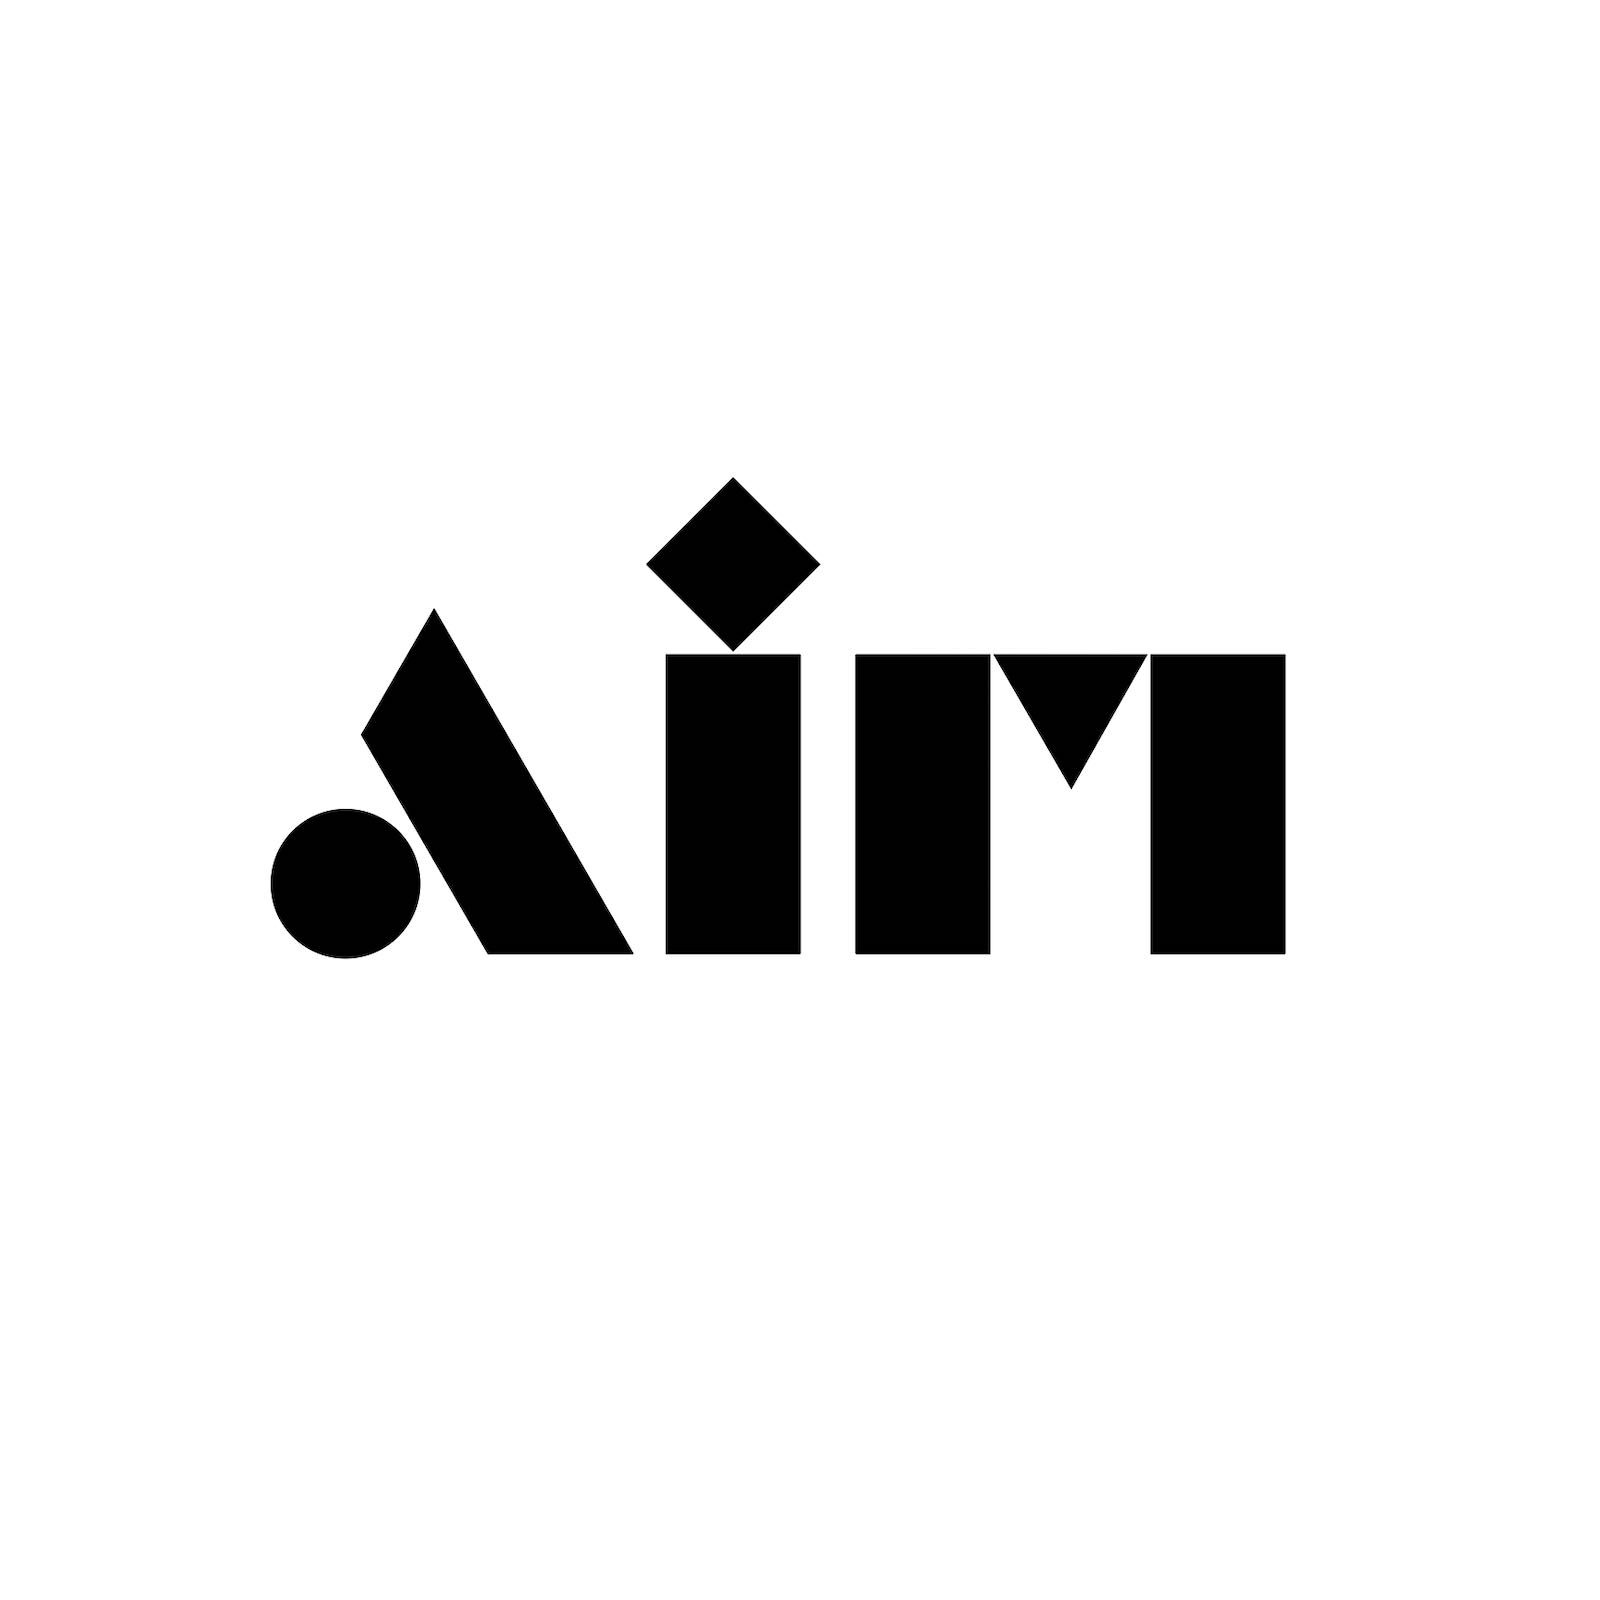 A.I.M. Logo Sign | Takenobu Igarashi